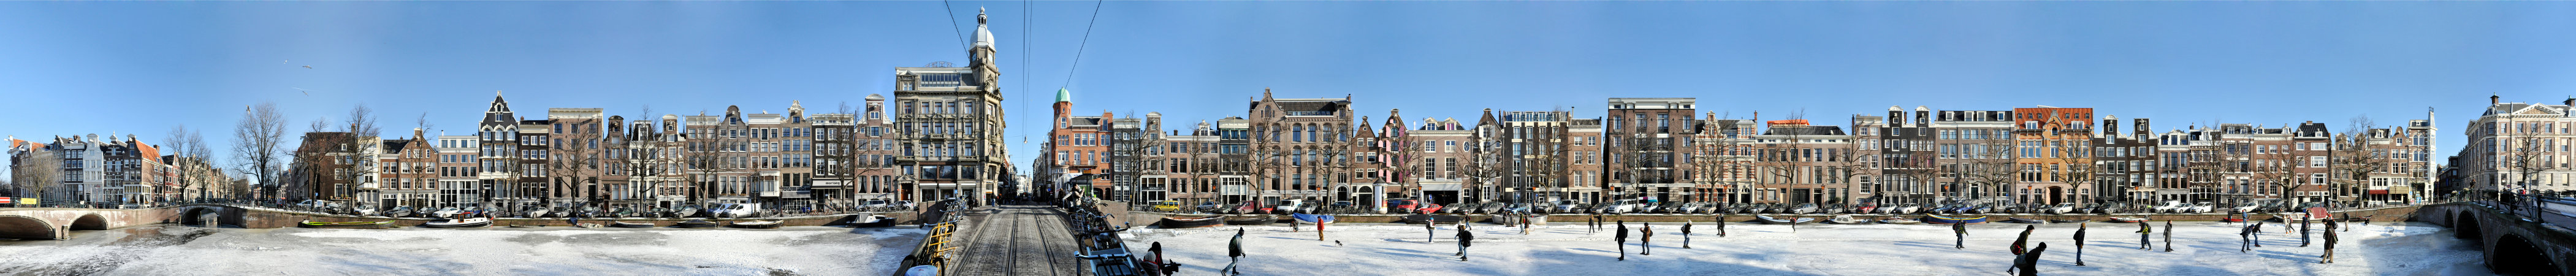 Keizersgracht Amsterdam Panorama